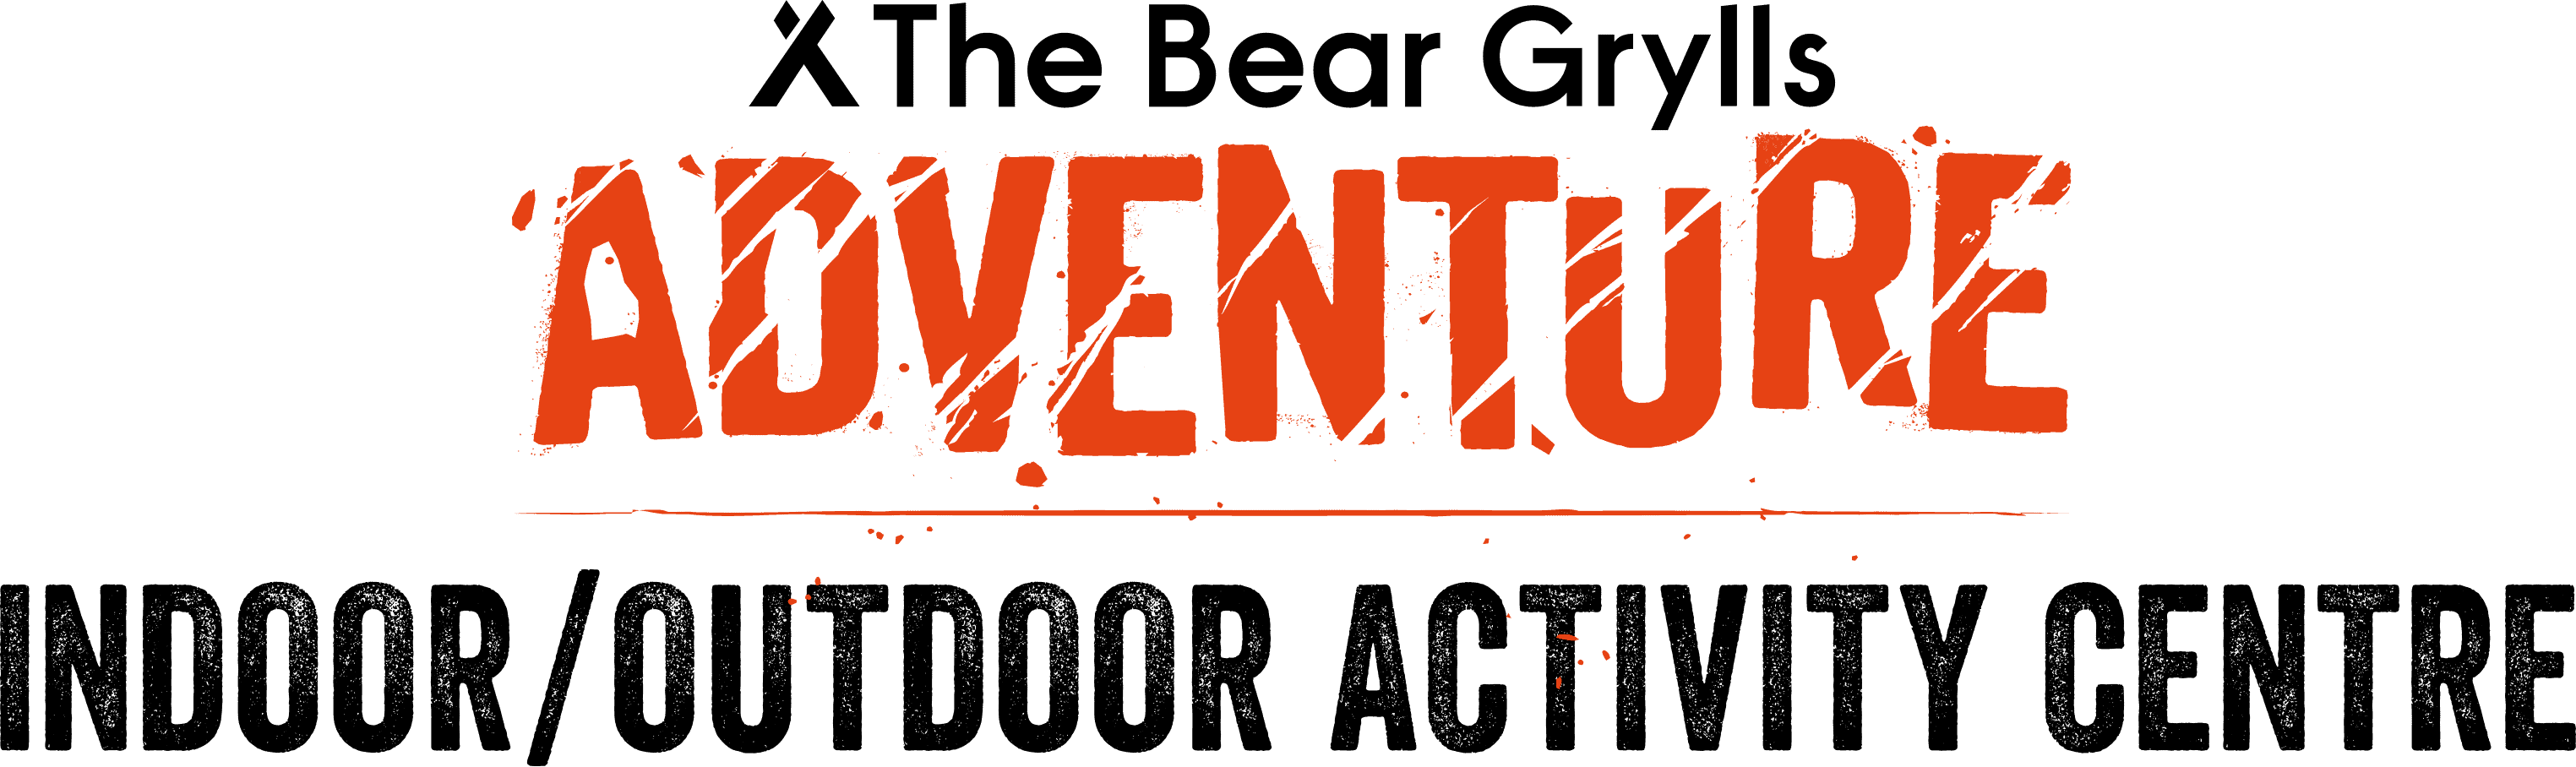 Bear Grylls Adventure: Special offer to celebrate Archery GB partnership